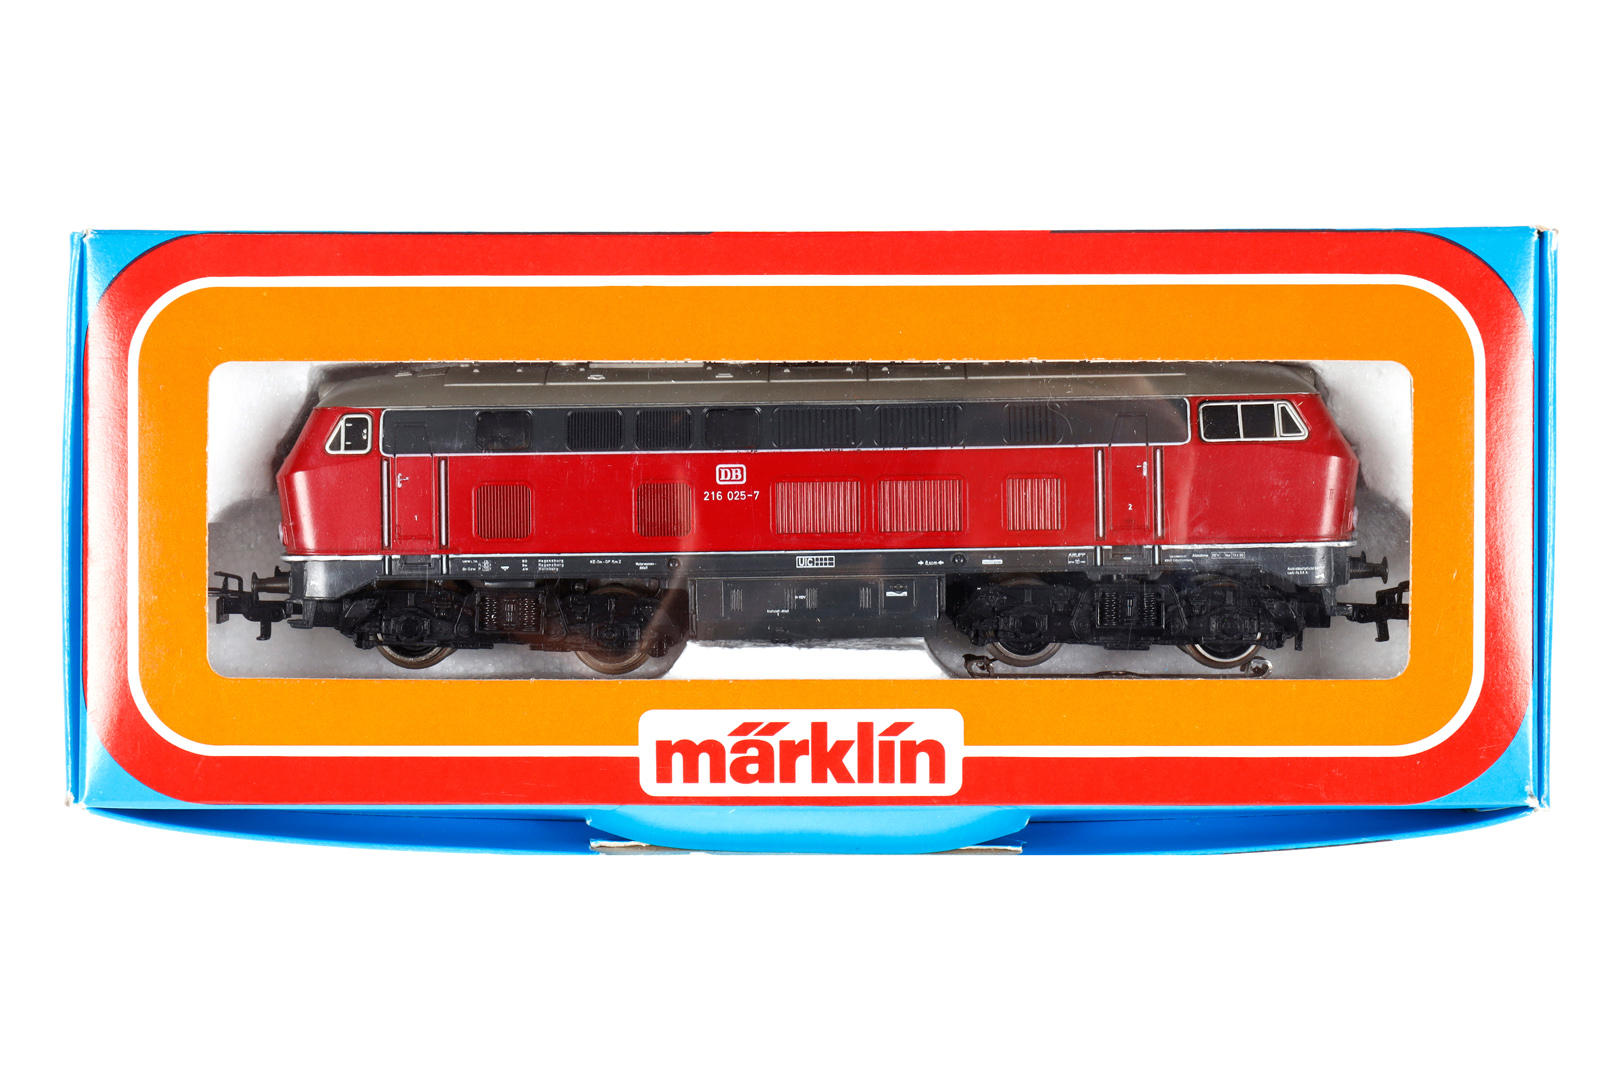 Märklin Diesellok ”216 025-7” 3075, Spur H0, grau/rot, Alterungsspuren, im leicht besch. OK, Z 2